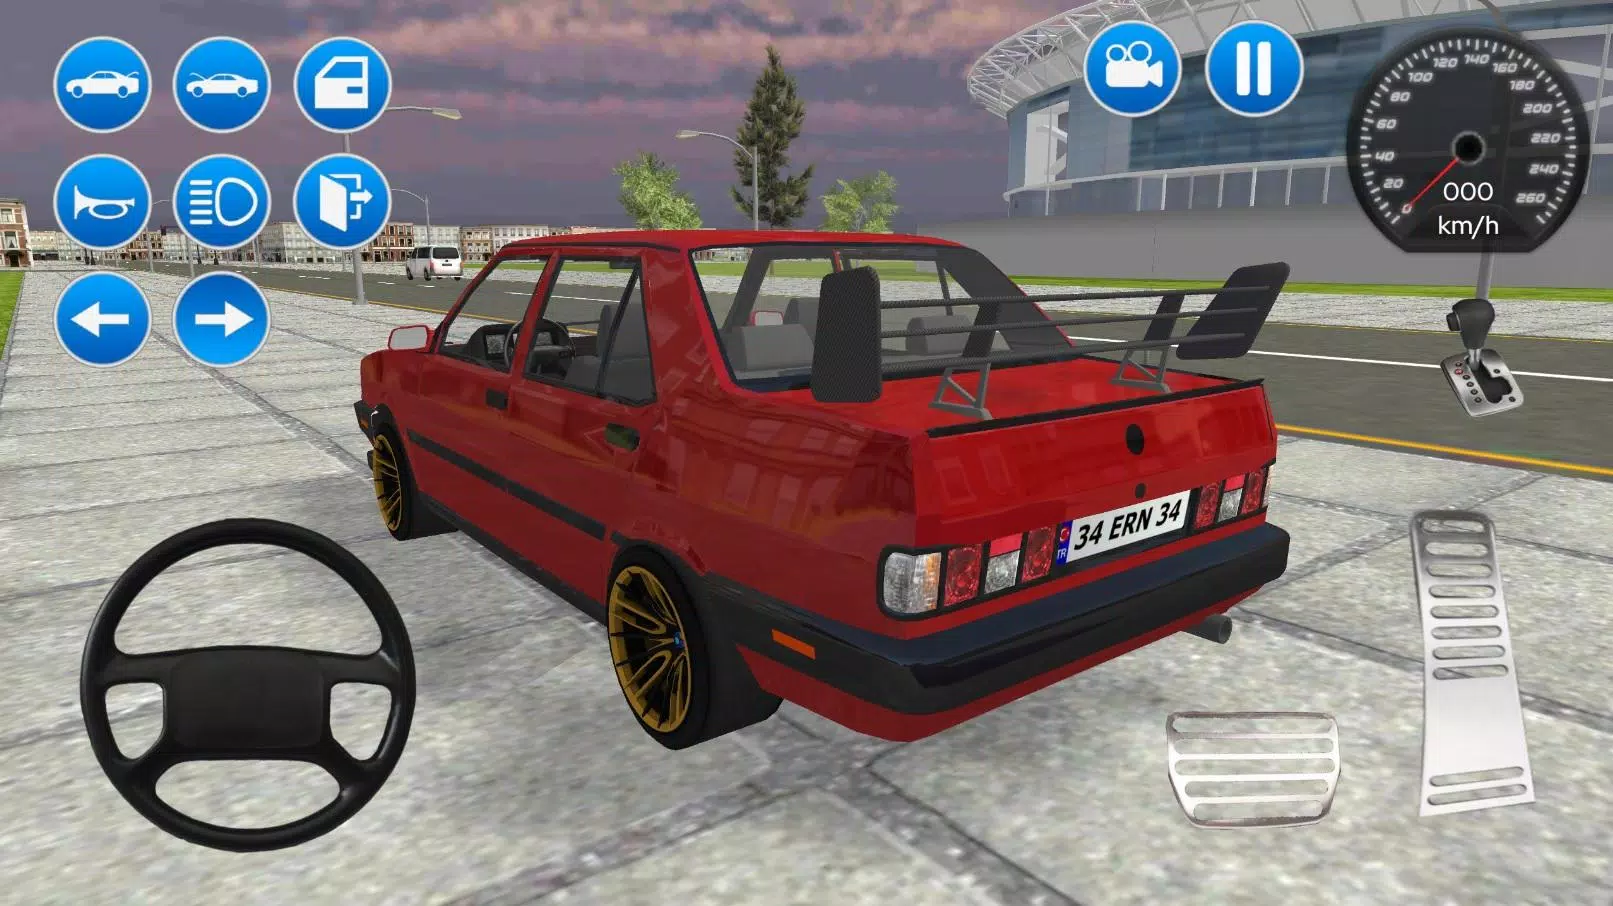 Veículo simulador de corrida, dirigindo jogos de carros 3d  gratuitos::Appstore for Android